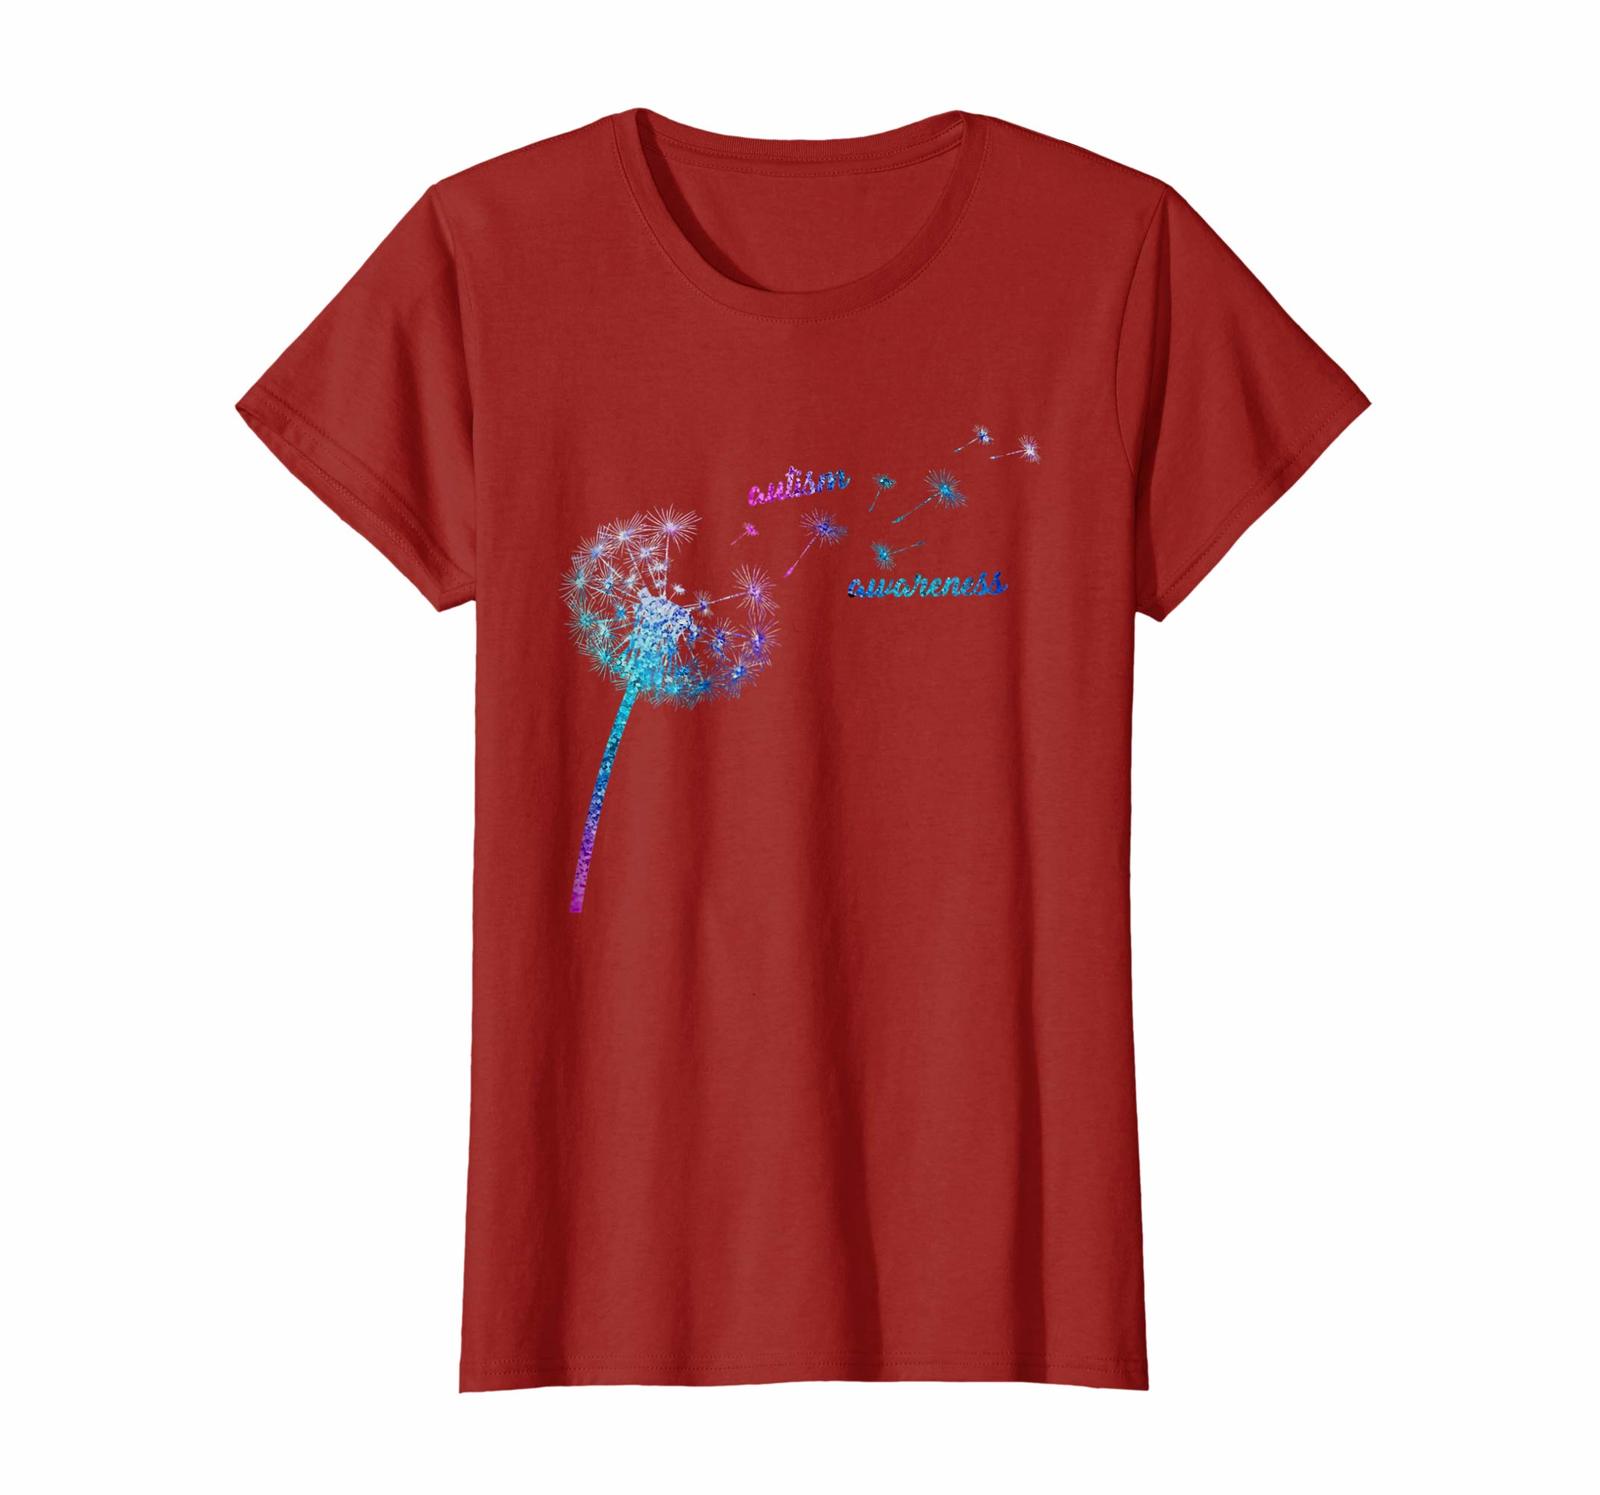 New Shirts - Autism Awareness Dandelion Flowers shirt Wowen - Tops